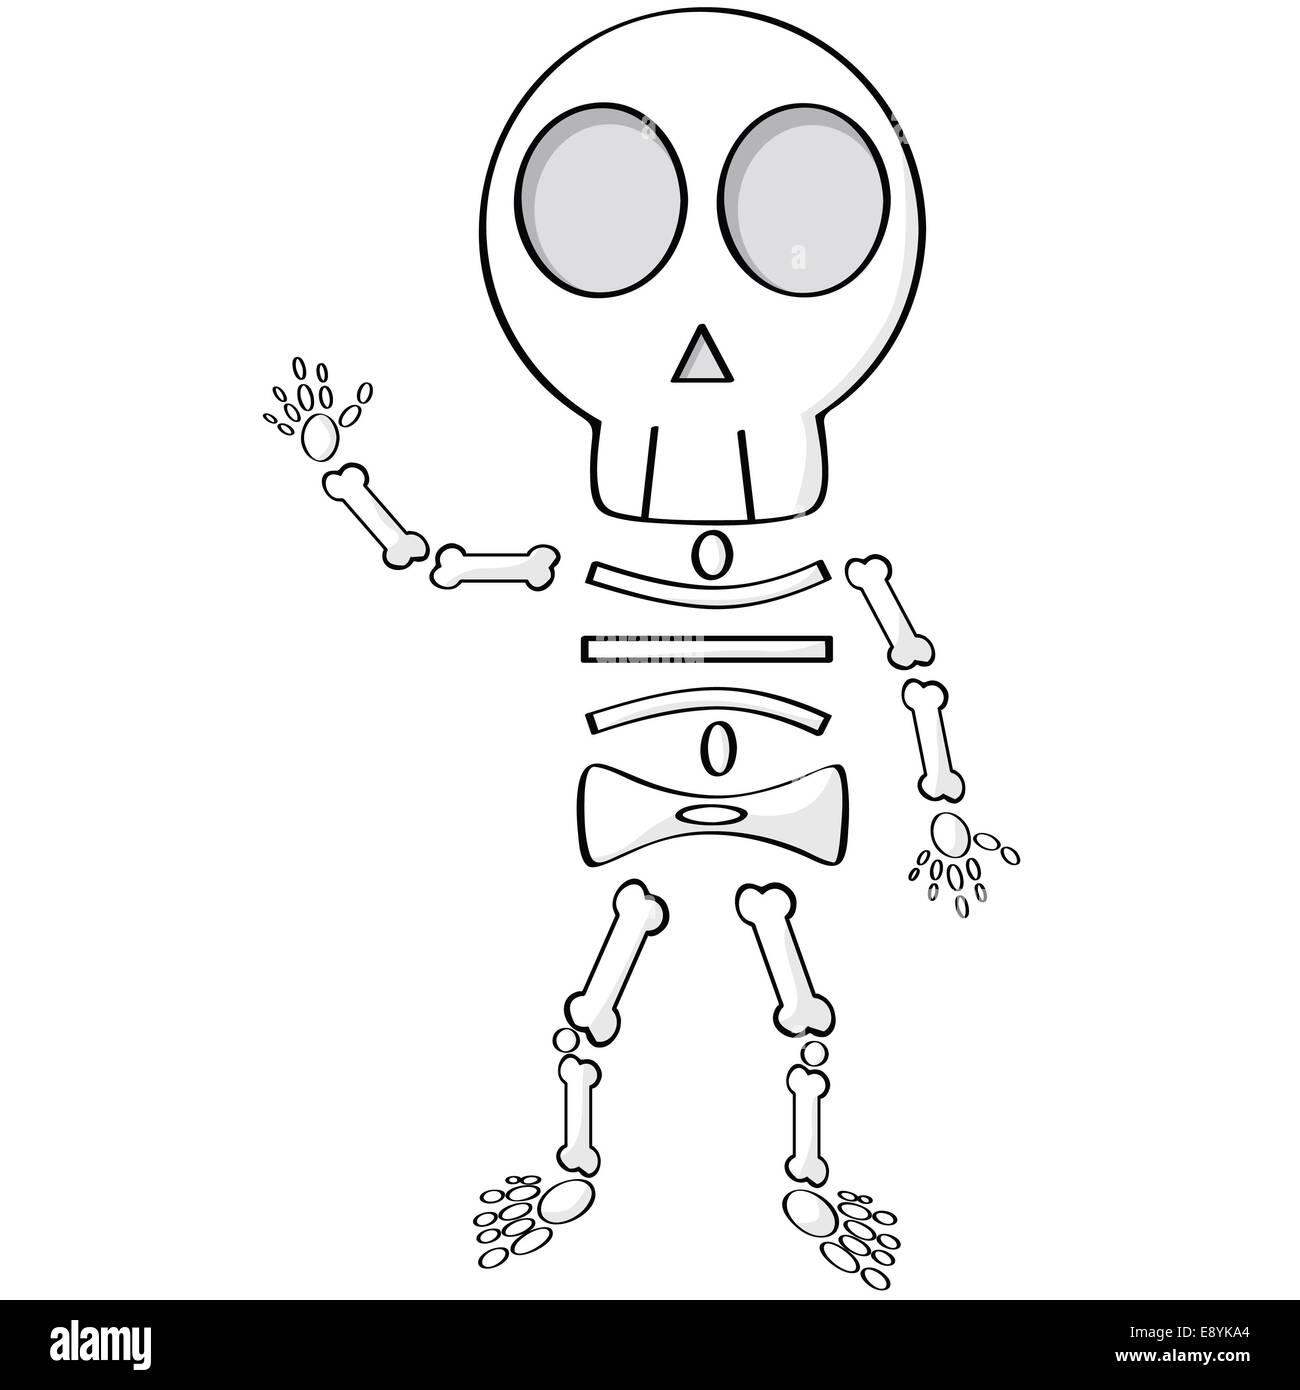 Esqueleto dibujo animado fotografías e imágenes de alta resolución - Alamy